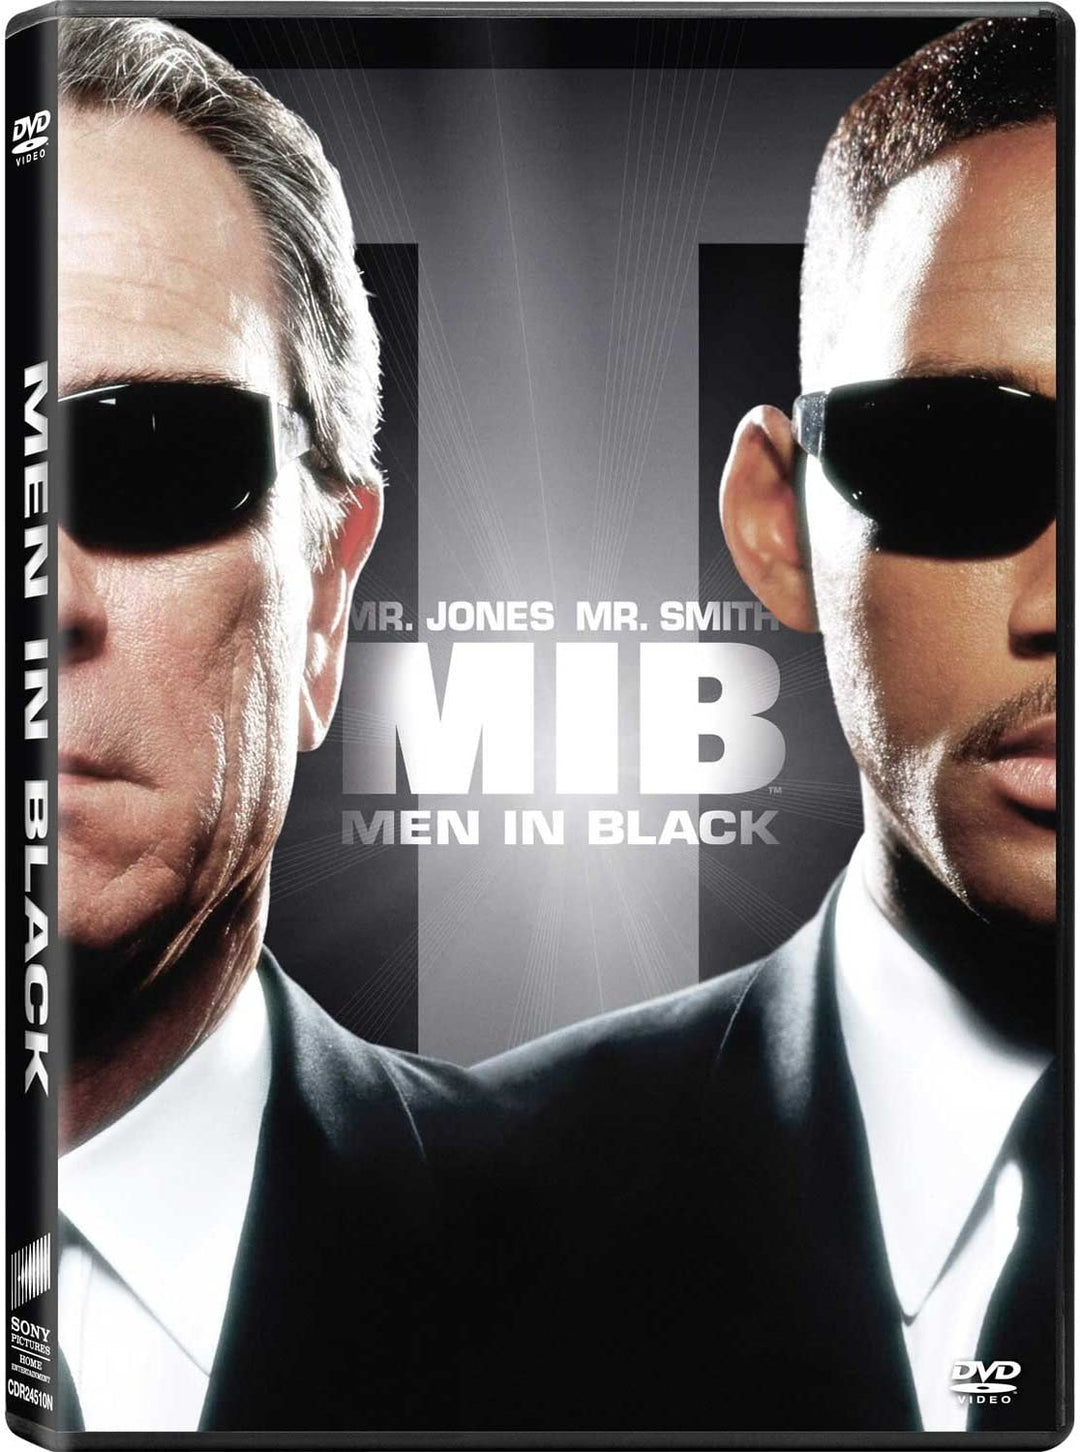 Men in Black [1997] - Sci-fi/Action [DVD]